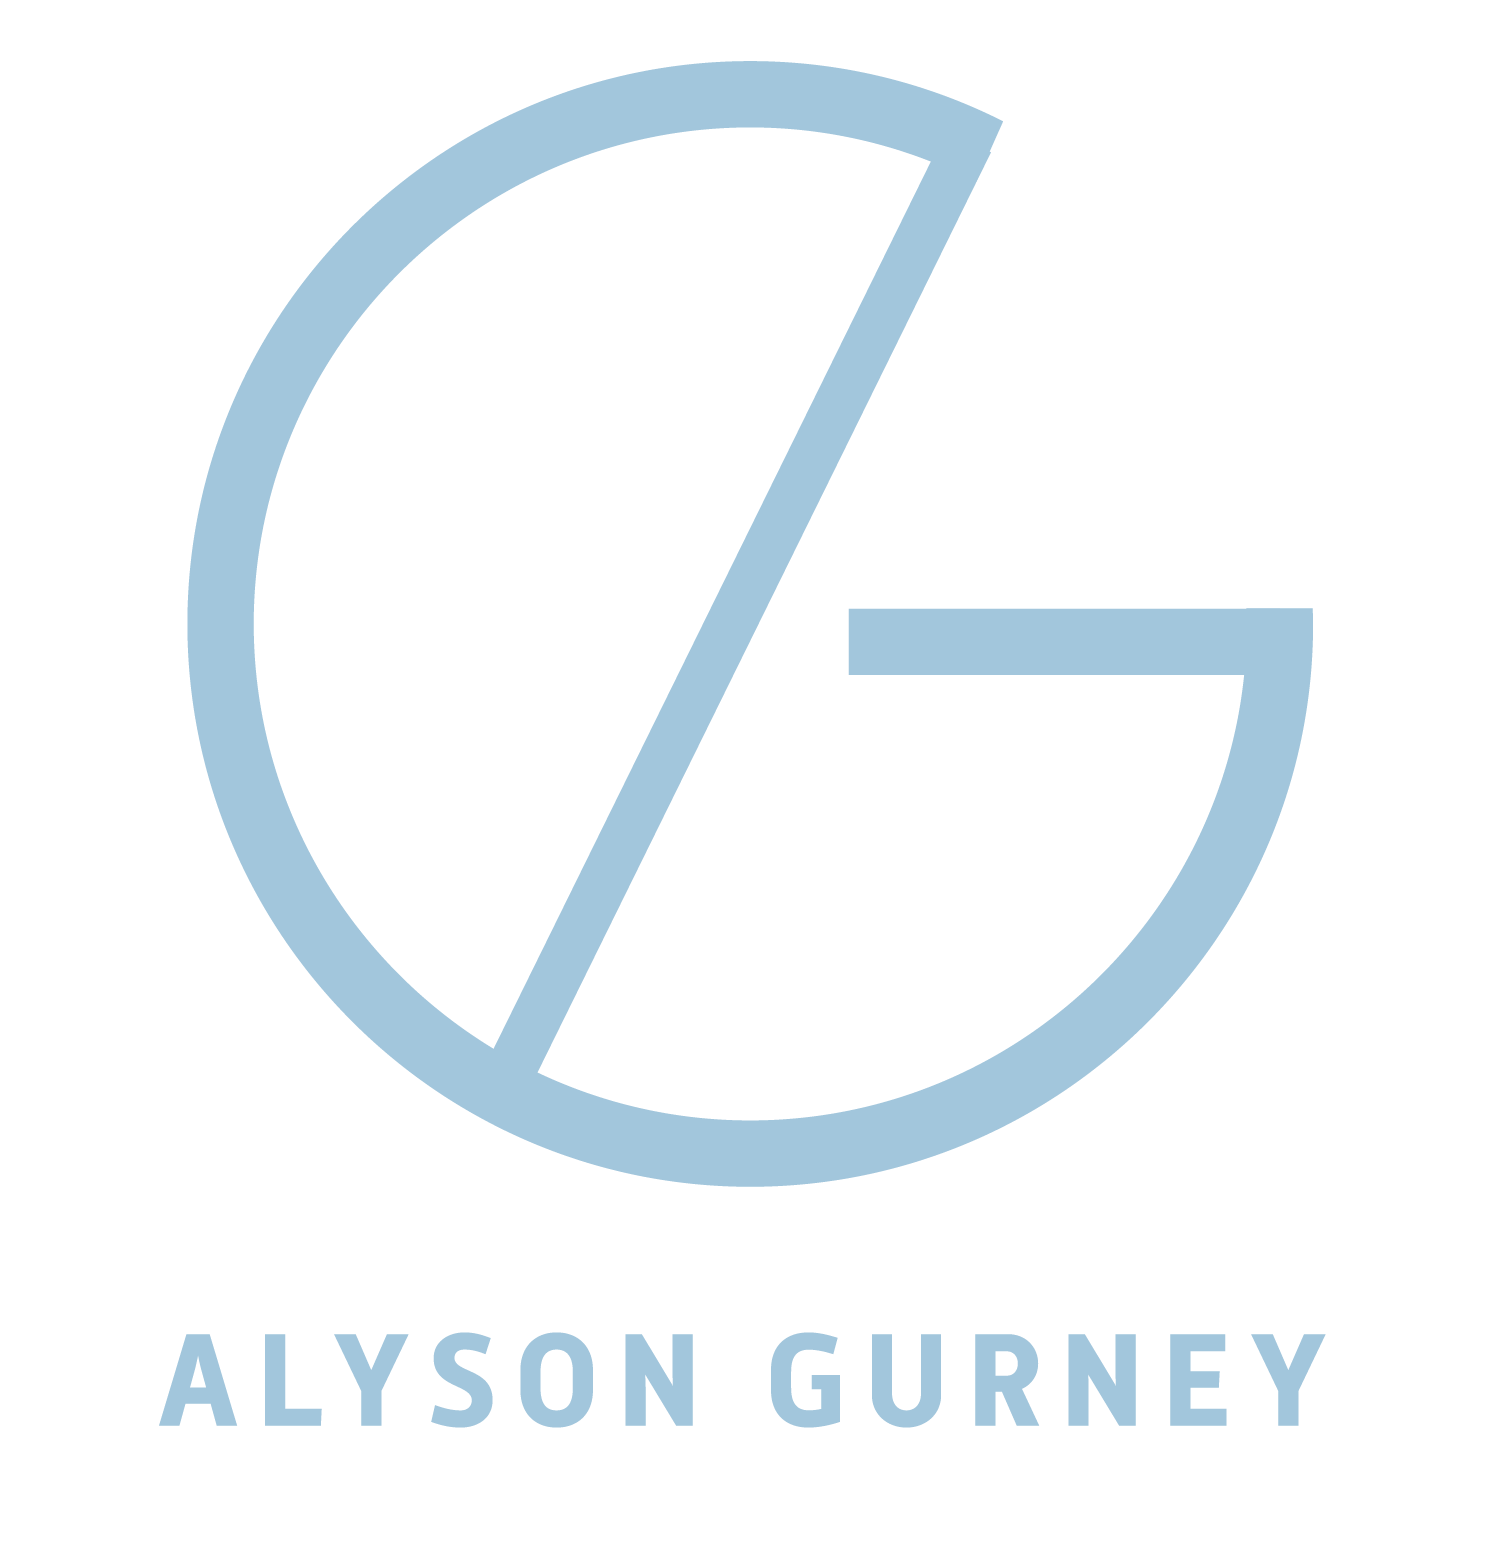 Alyson Gurney